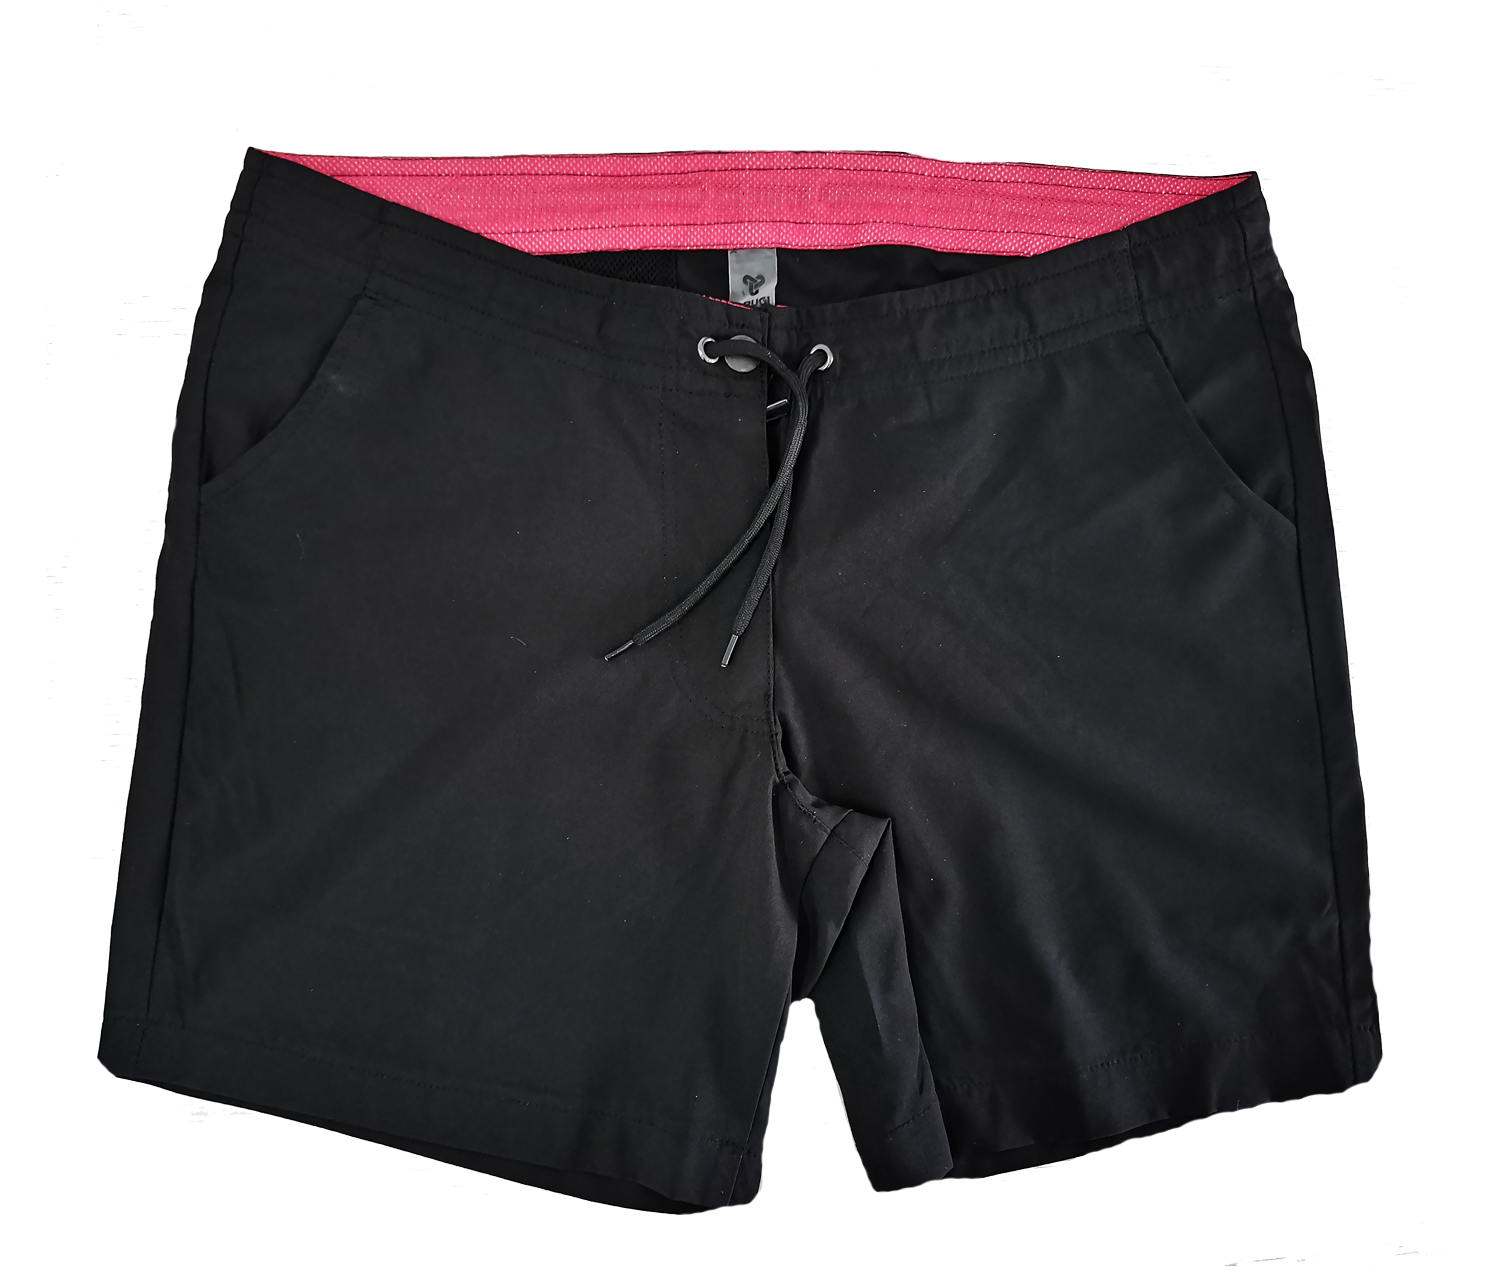 Men's/Women's Cvc Sports Shorts With Stretch